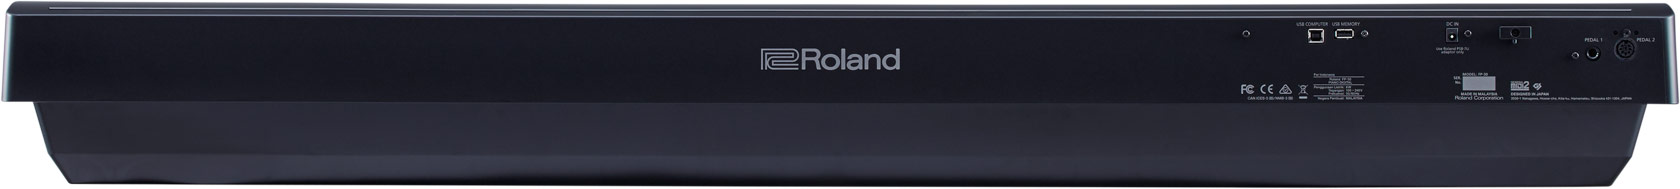 Roland Fp 30 Digital Piano